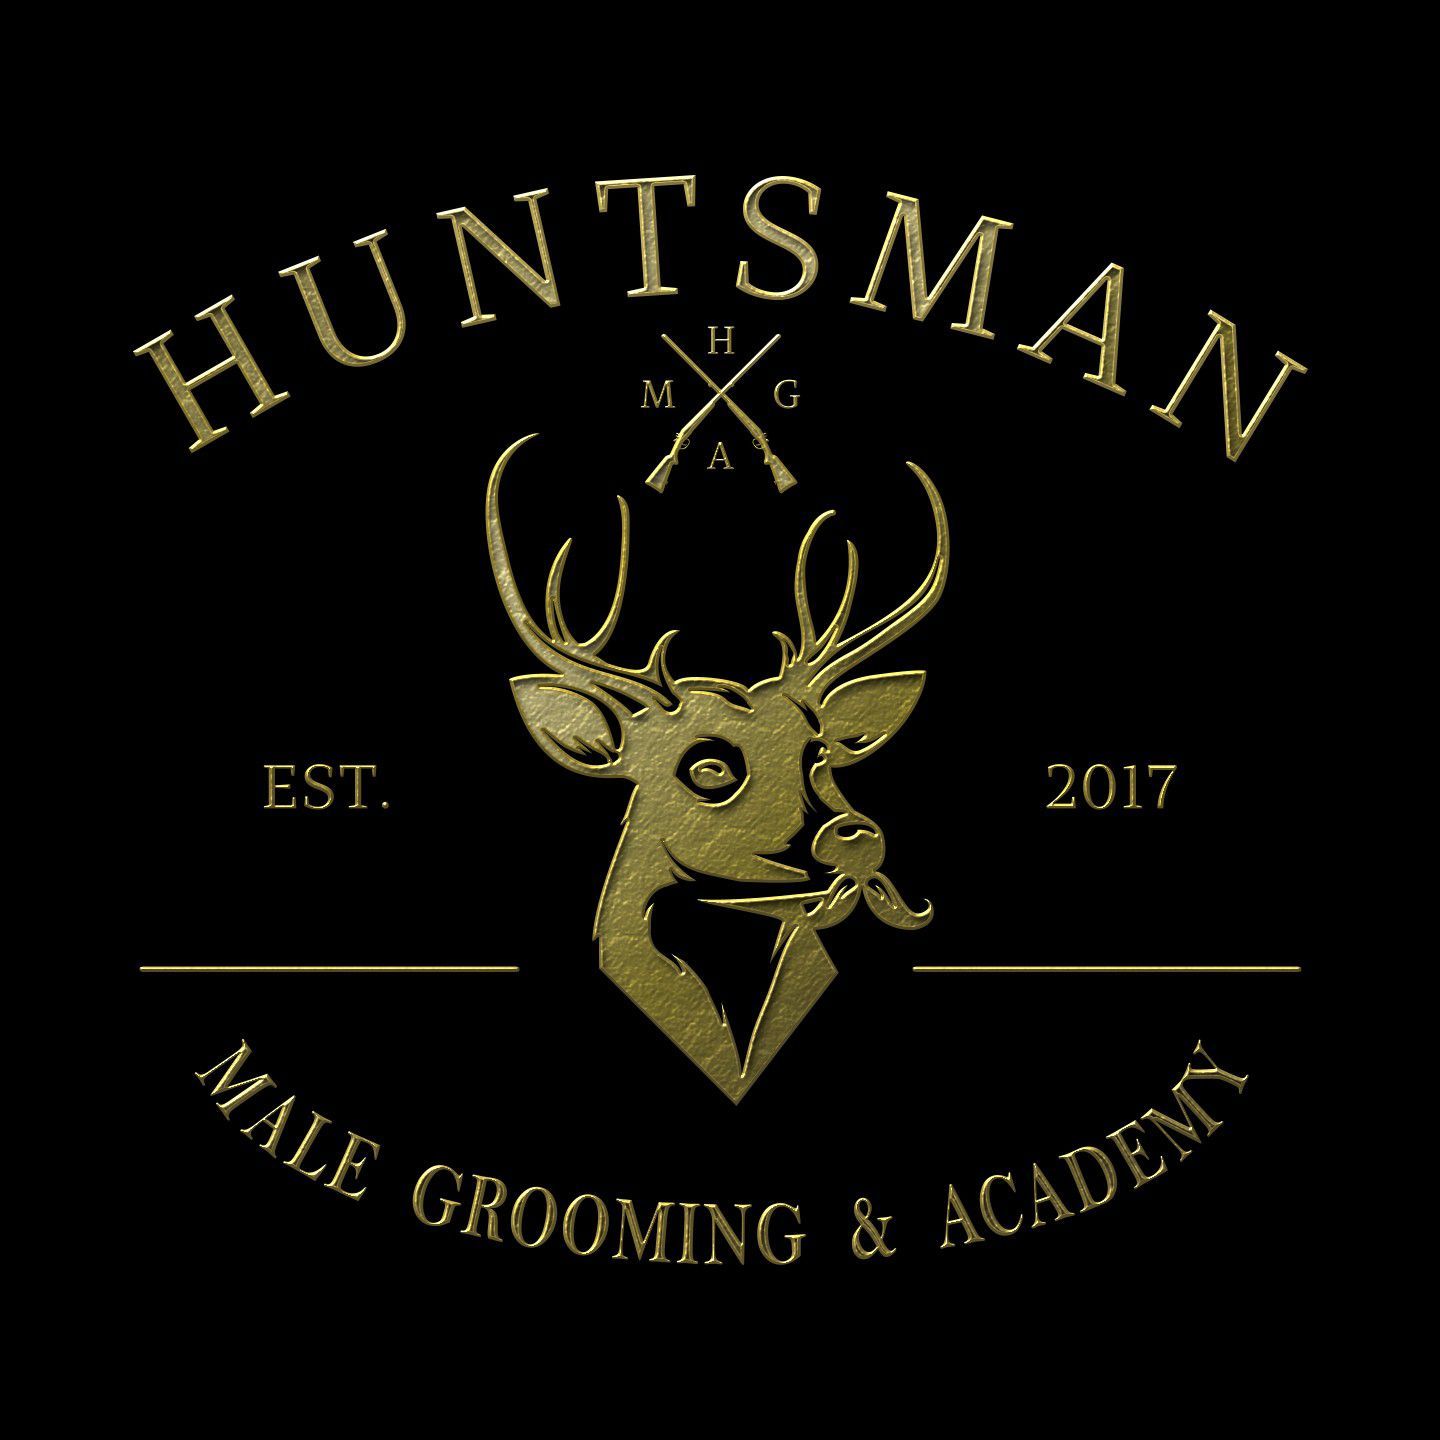 Huntsman - Male Grooming & Academy, 2 Westcliffe Drive, FY3 7HG, Blackpool